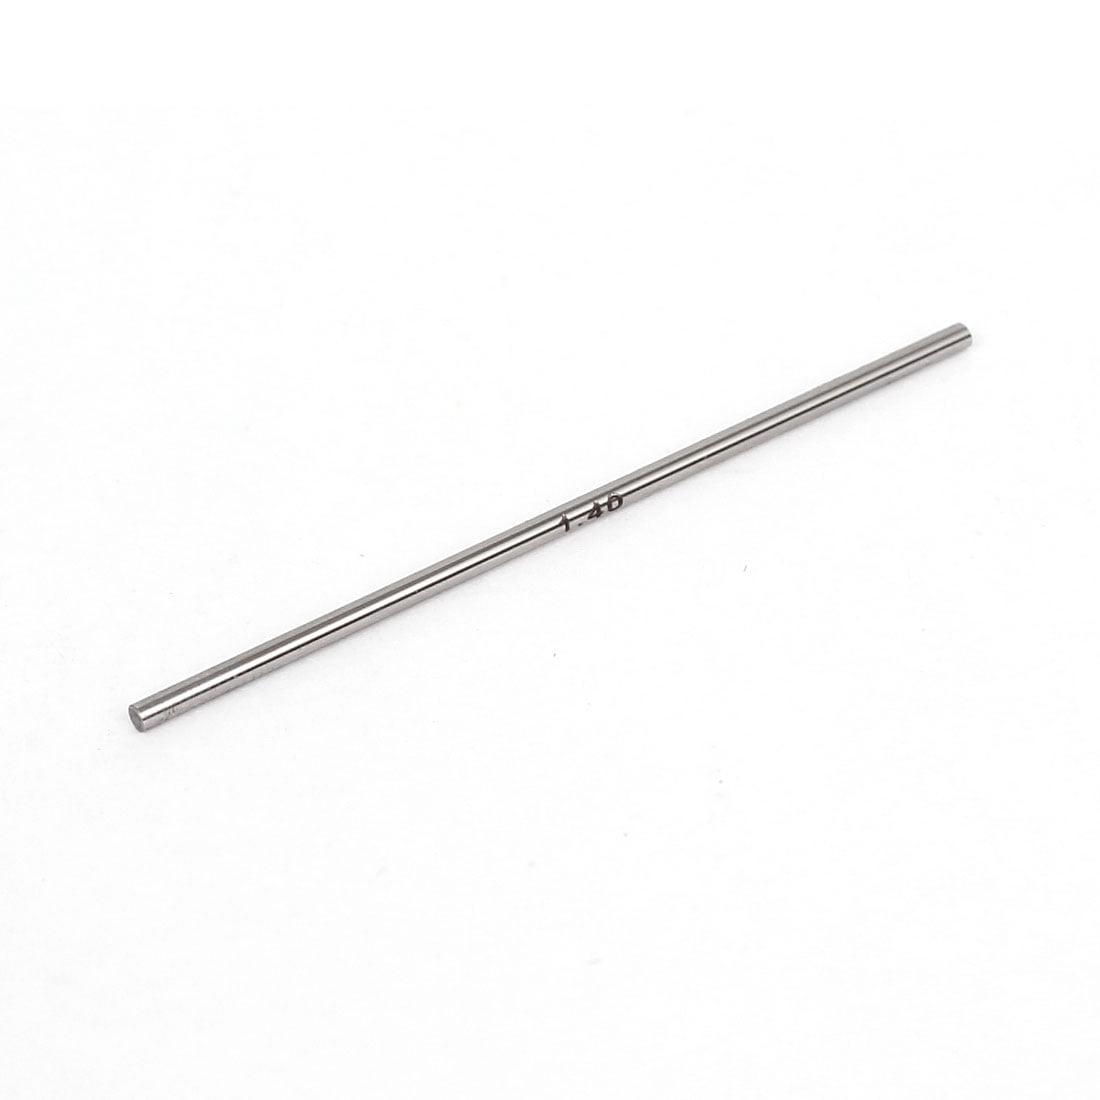 8mm Diameter 50mm Length Carbide Pin Gage Gauge Silver Tone 